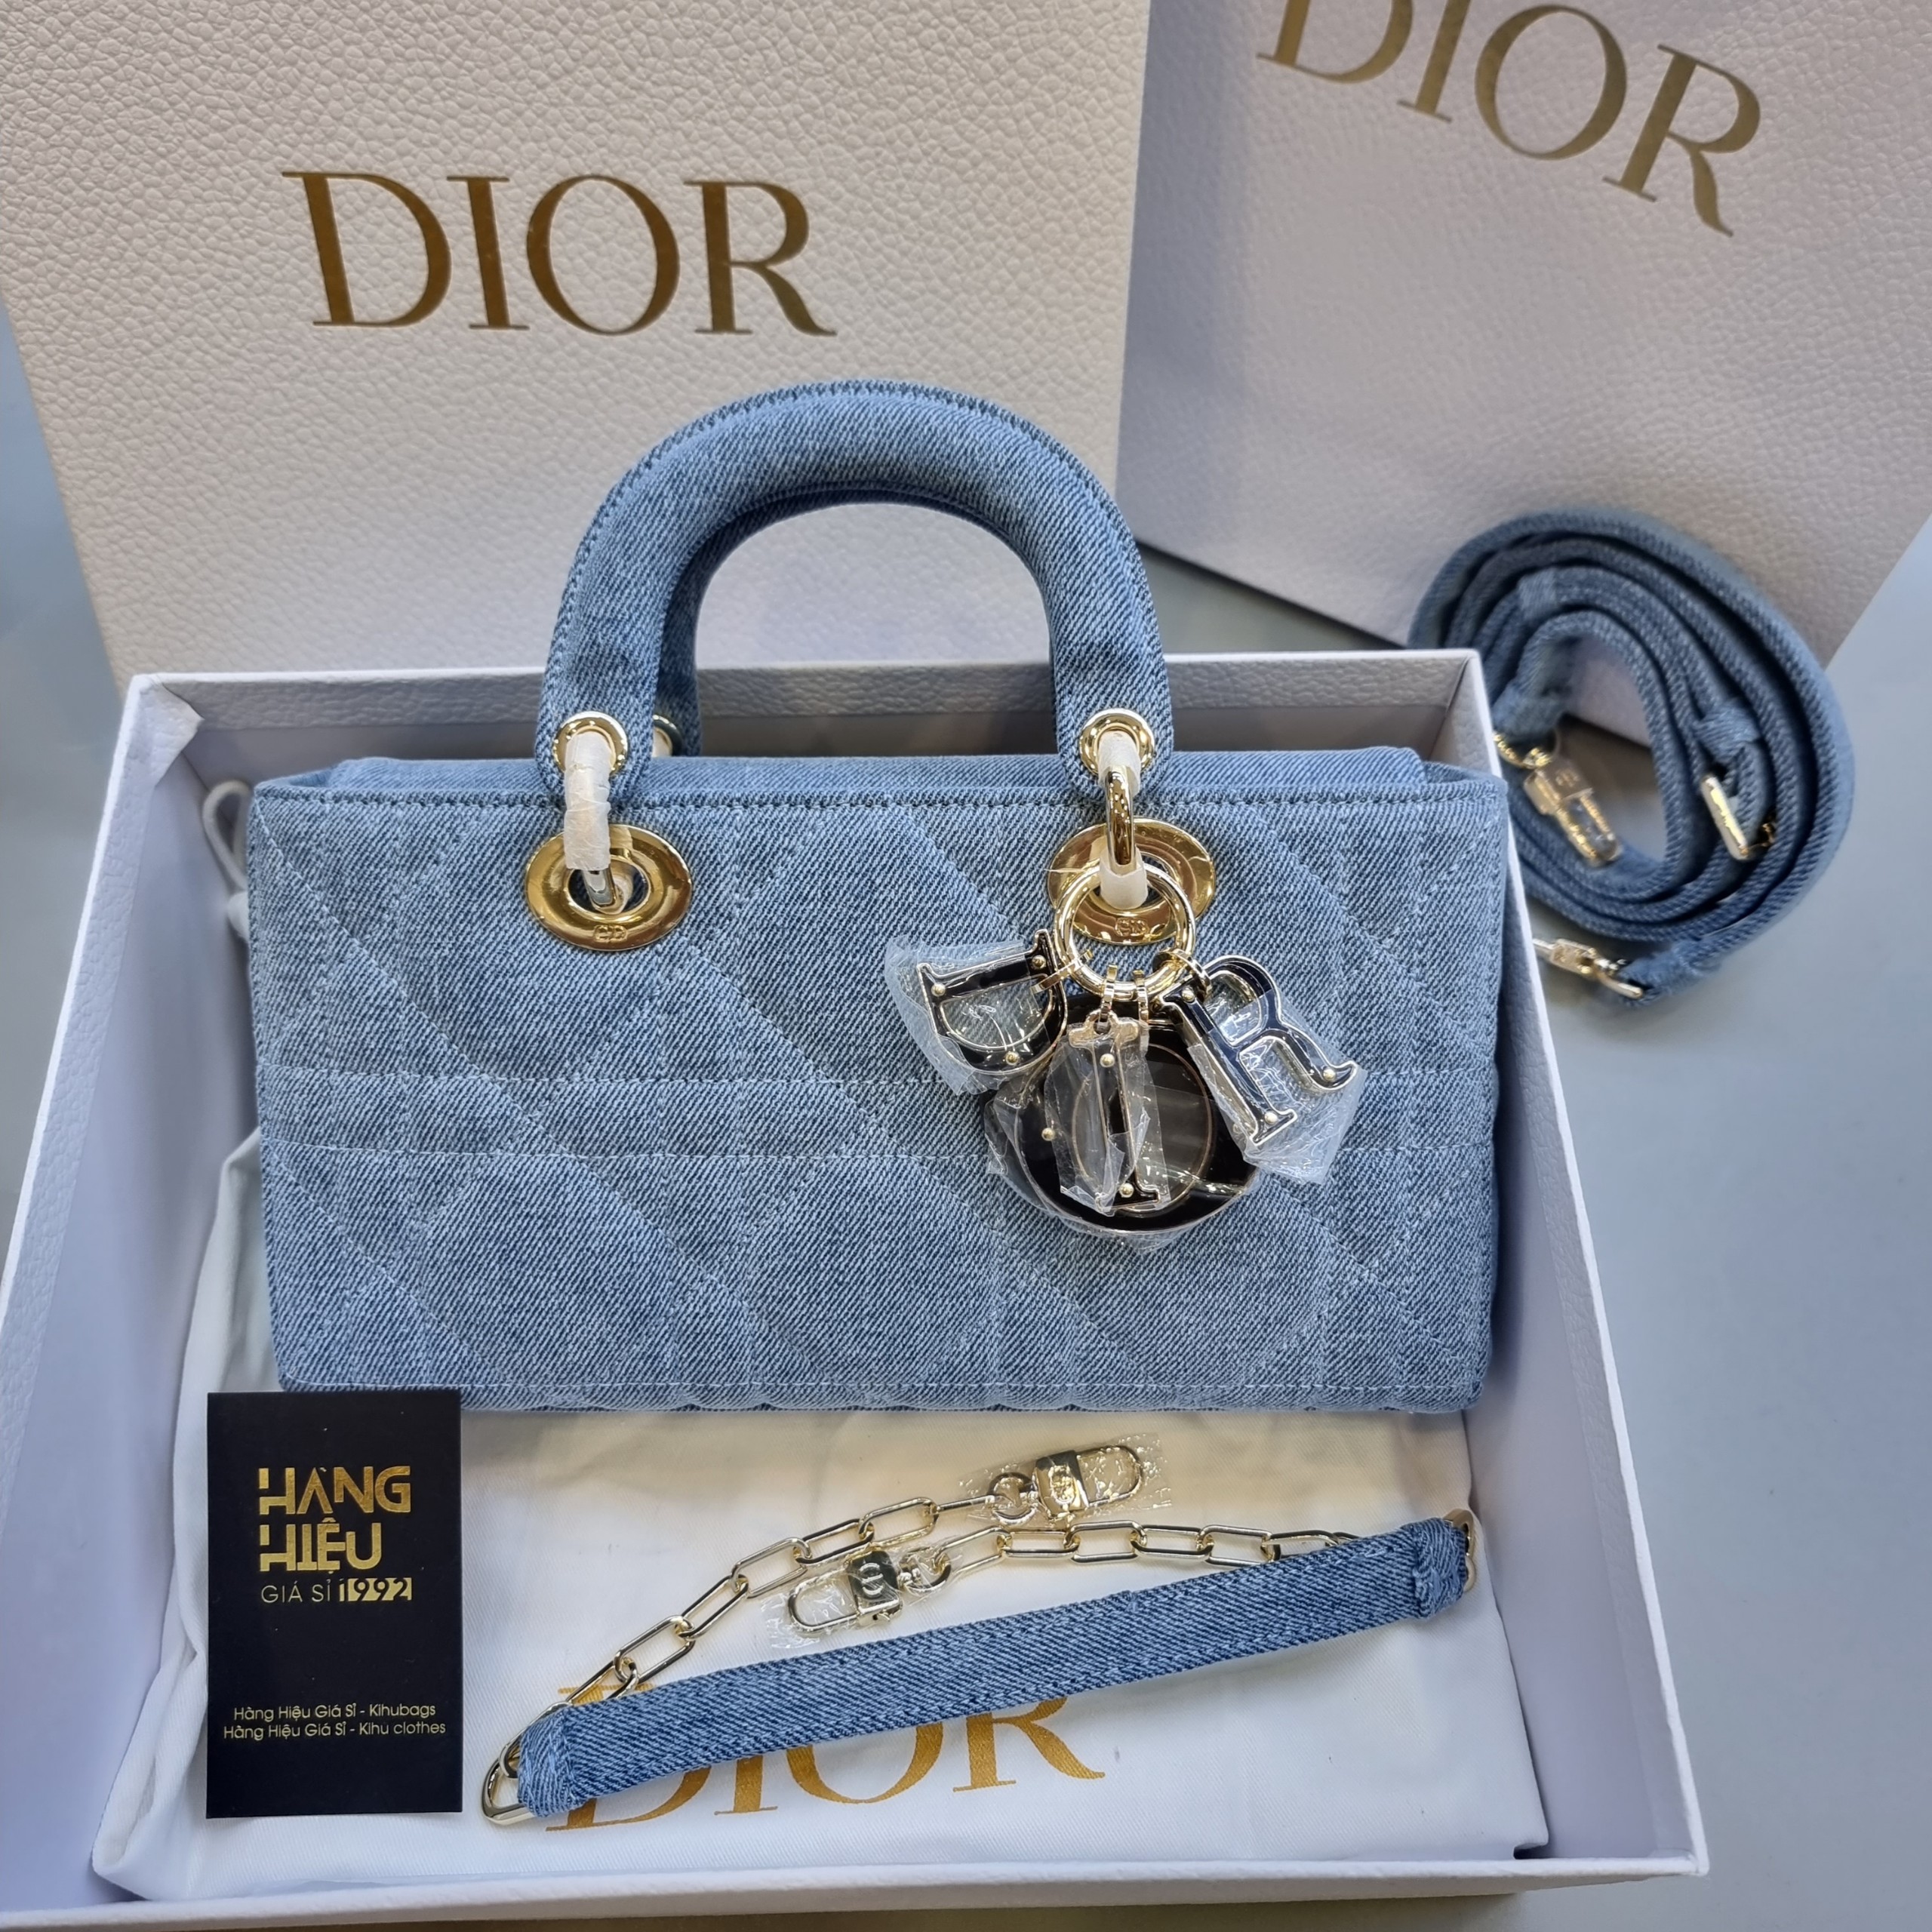 Sydneys Lady Dior PopUp Celebrates The Iconic Bag